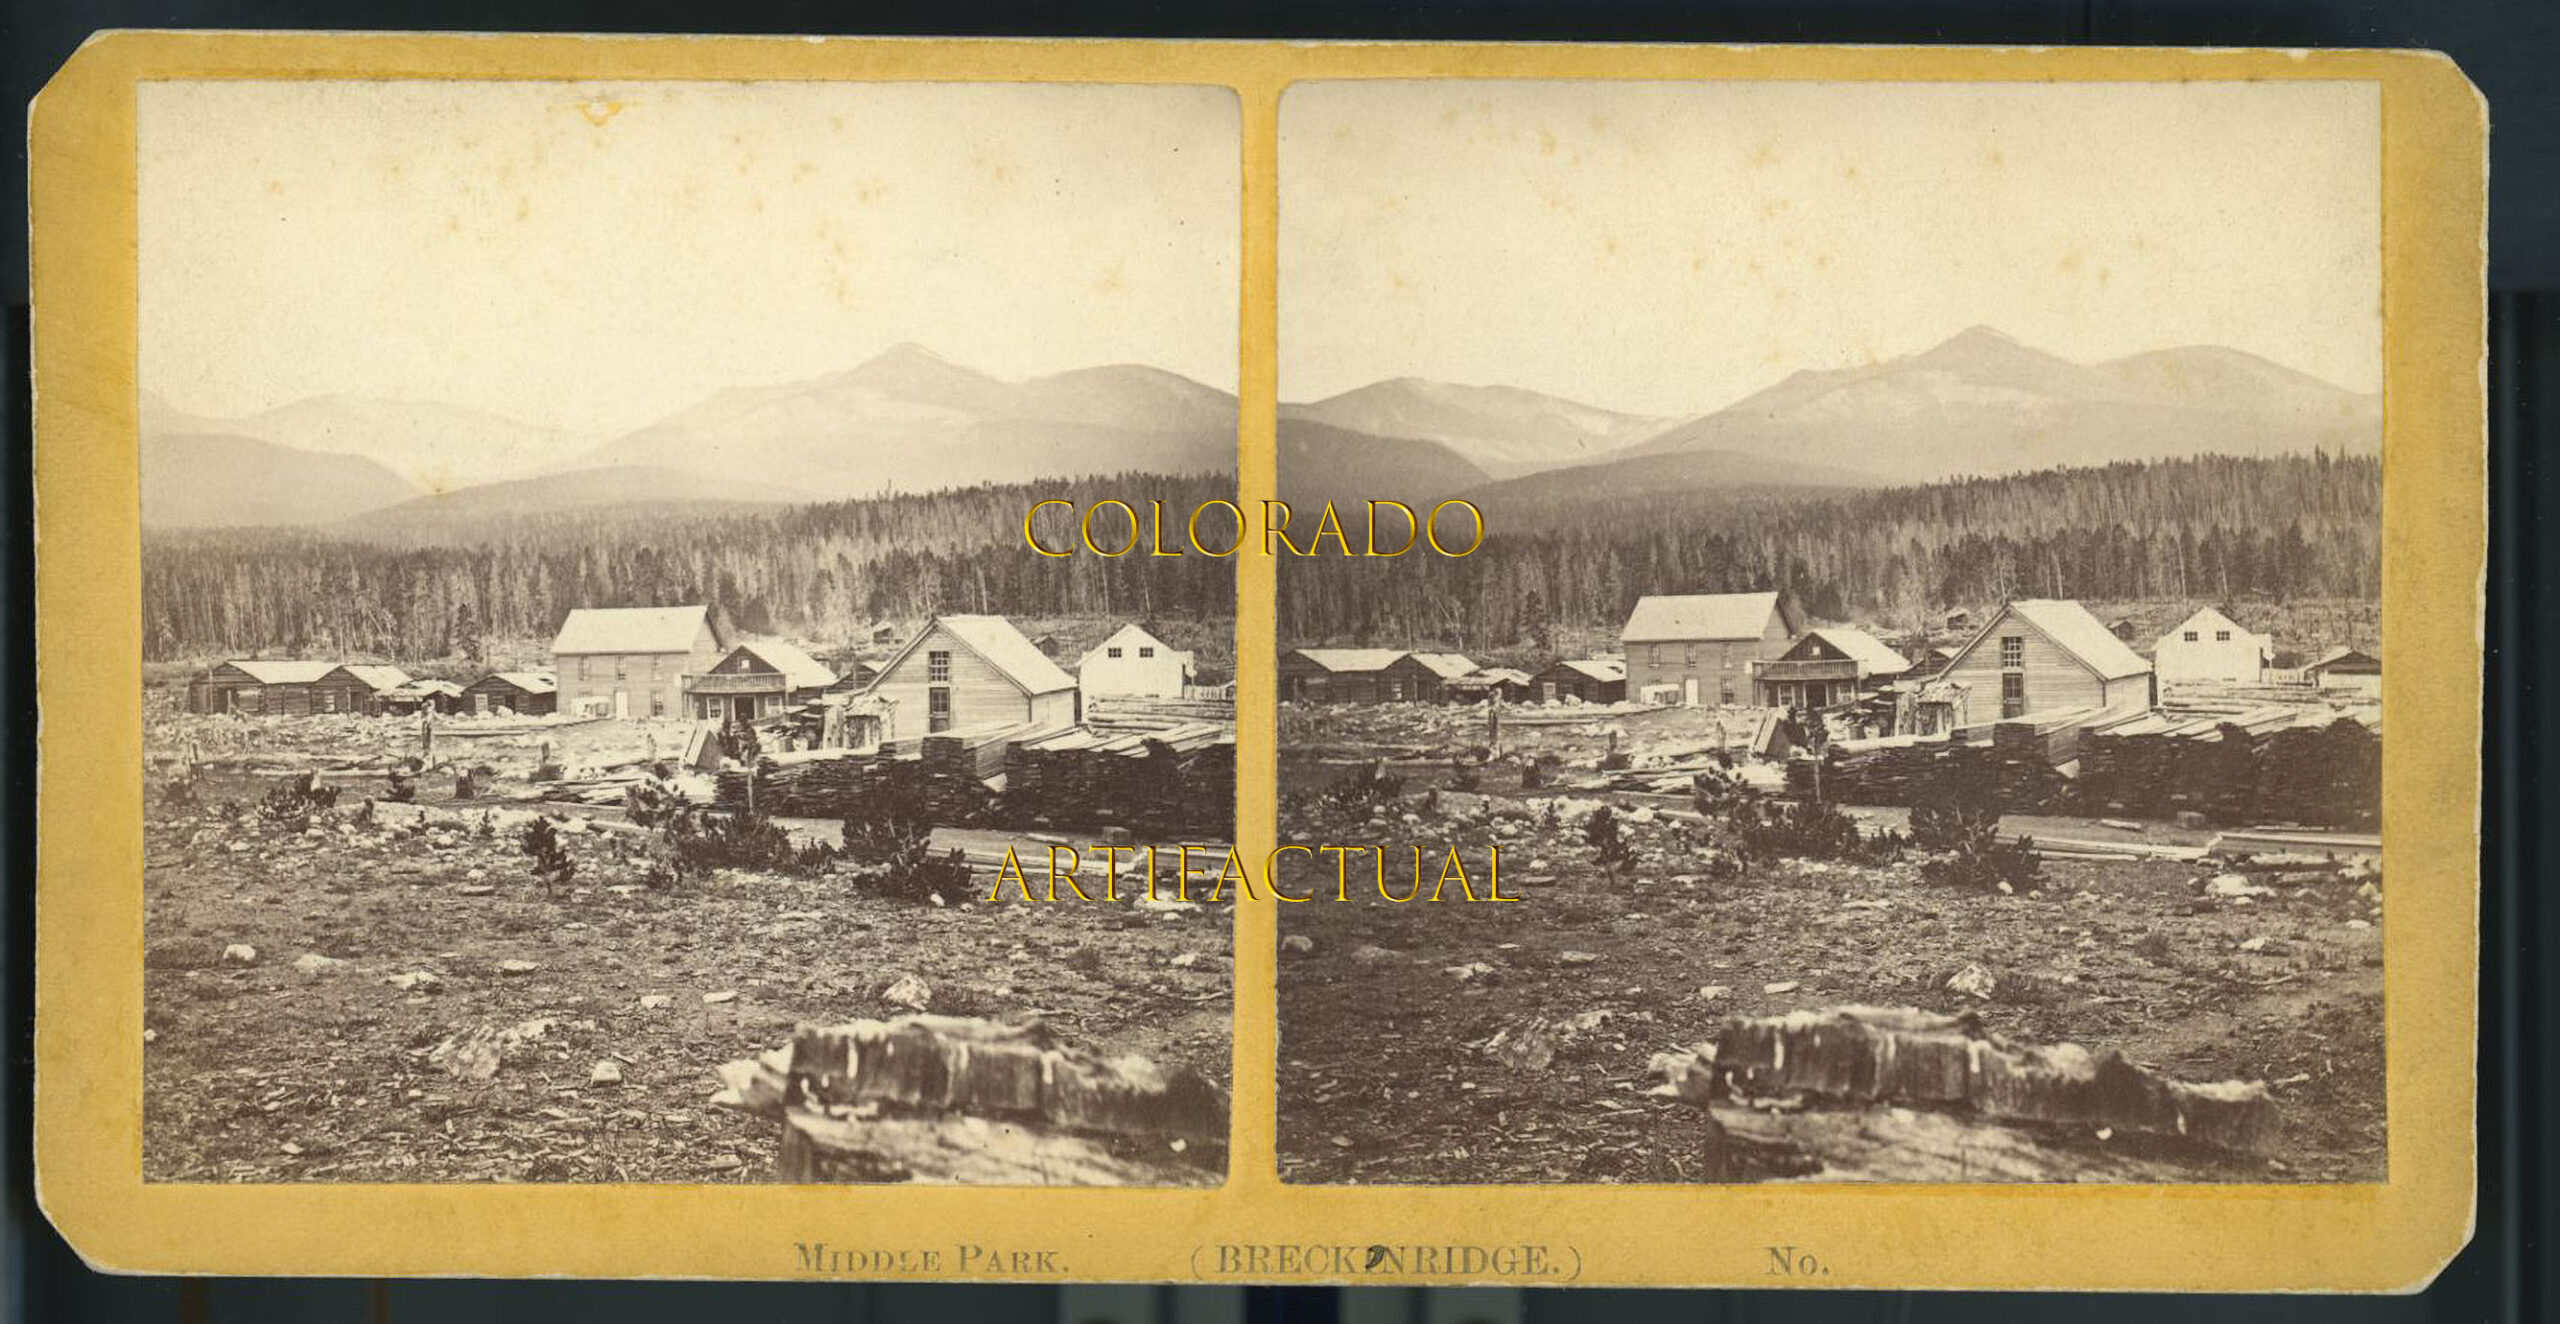 Breckenridge Colorado Territory stereoview photograph by William G. Chamberlain circa 1870